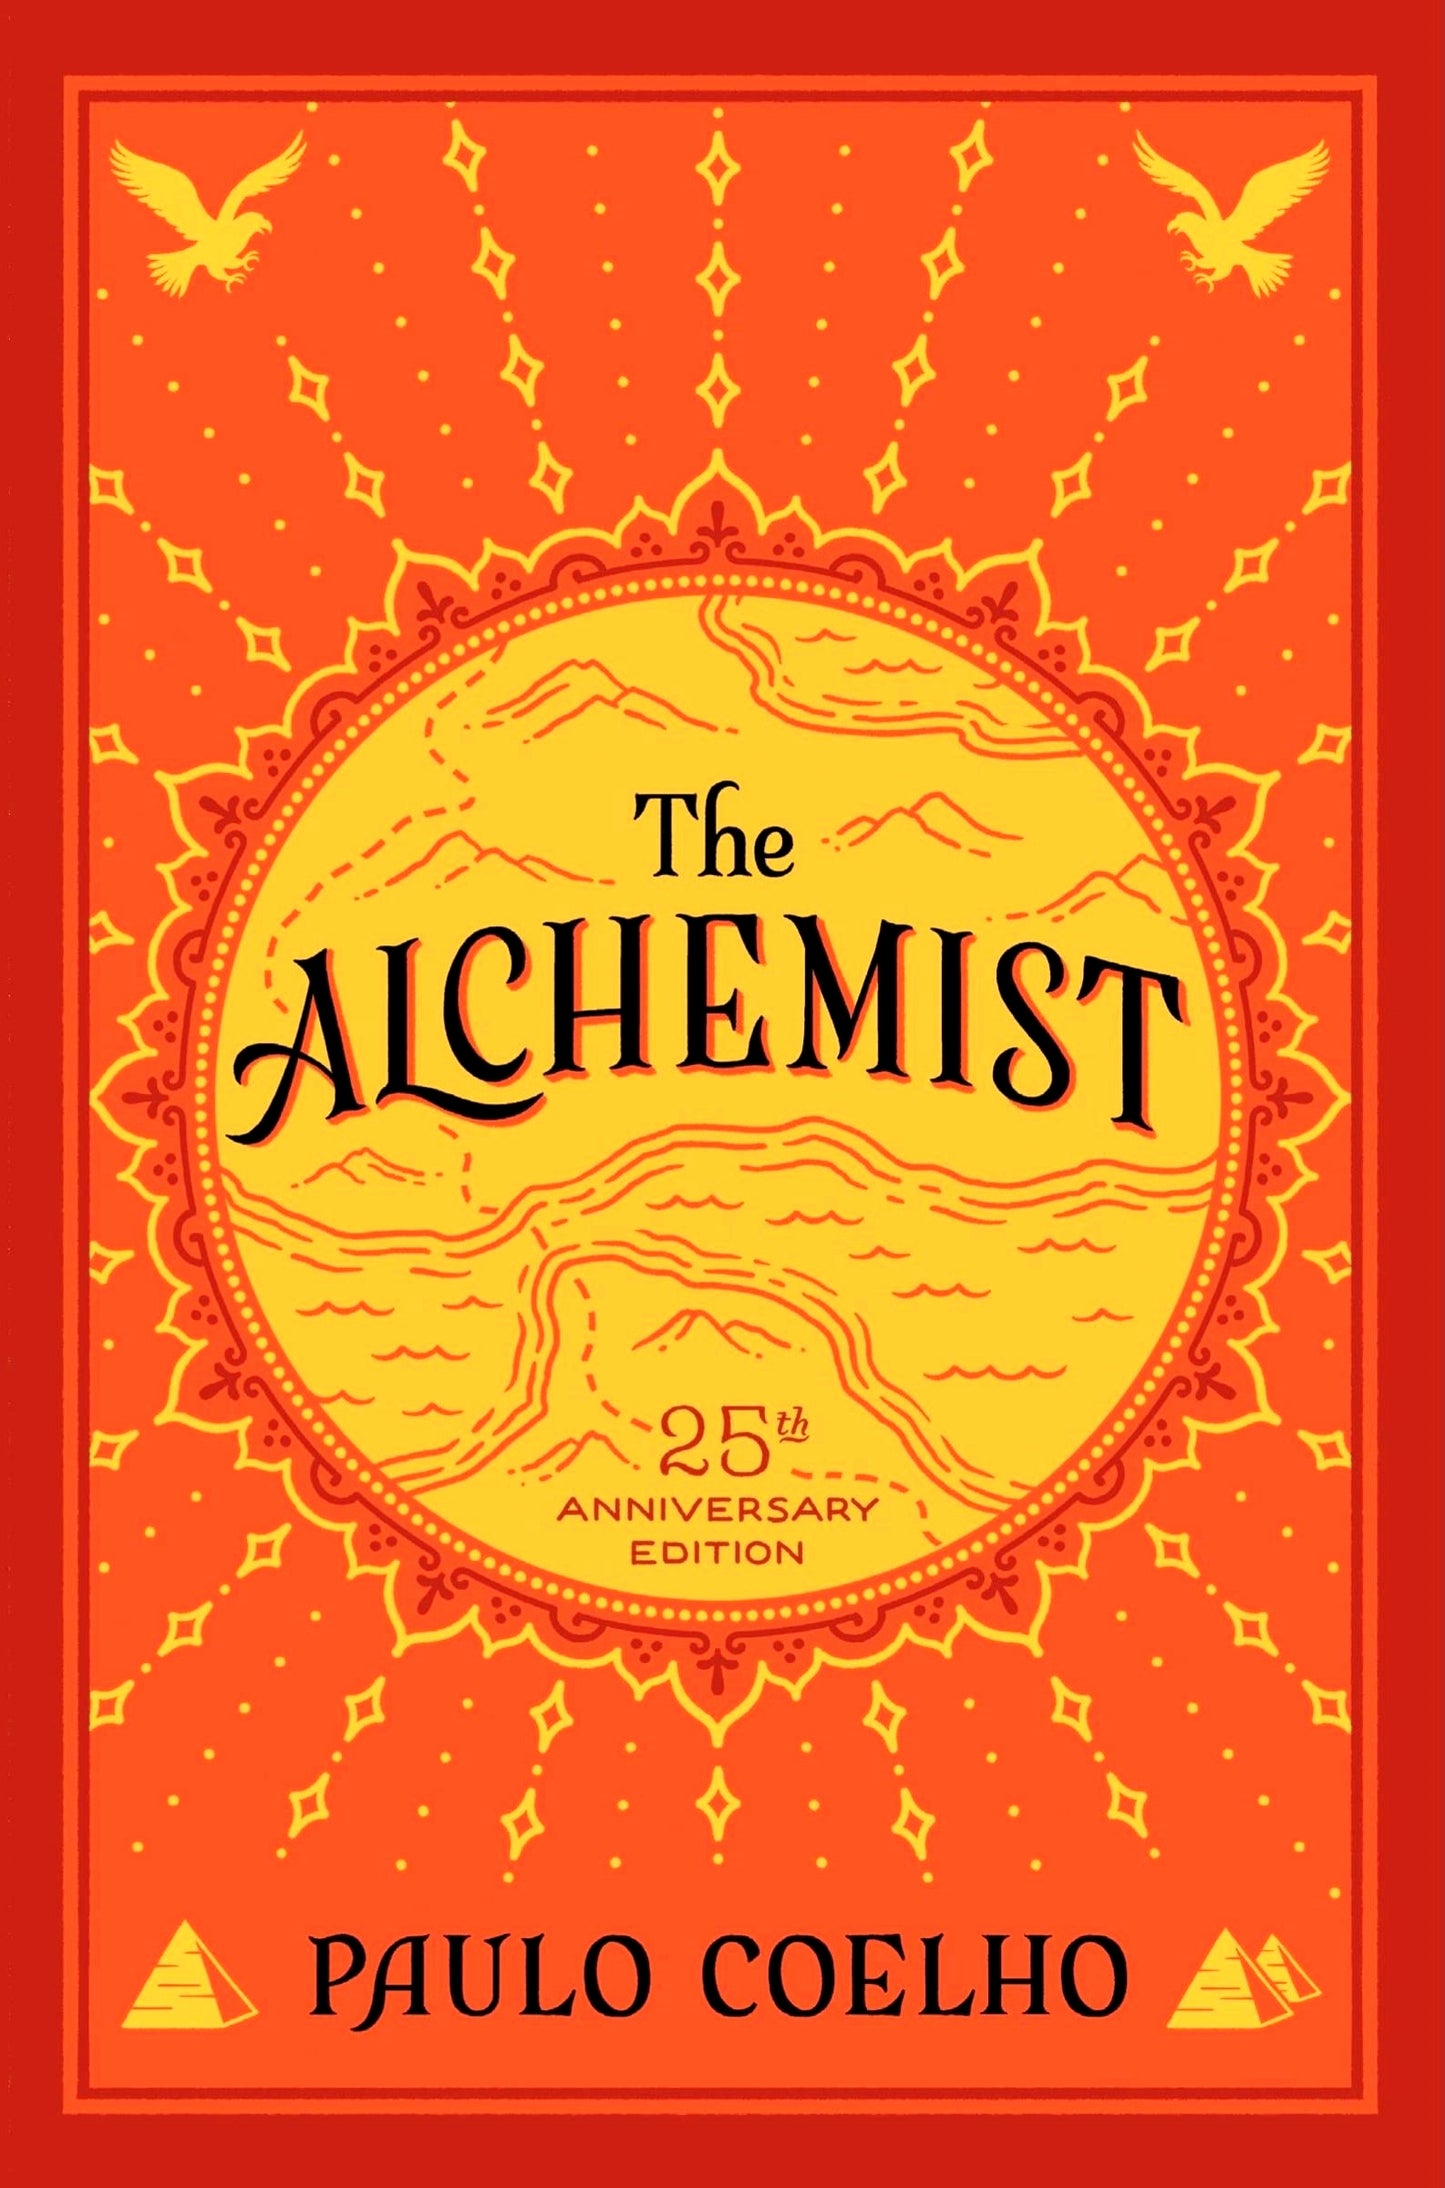 The Alchemist by Paulo Coelho paperback